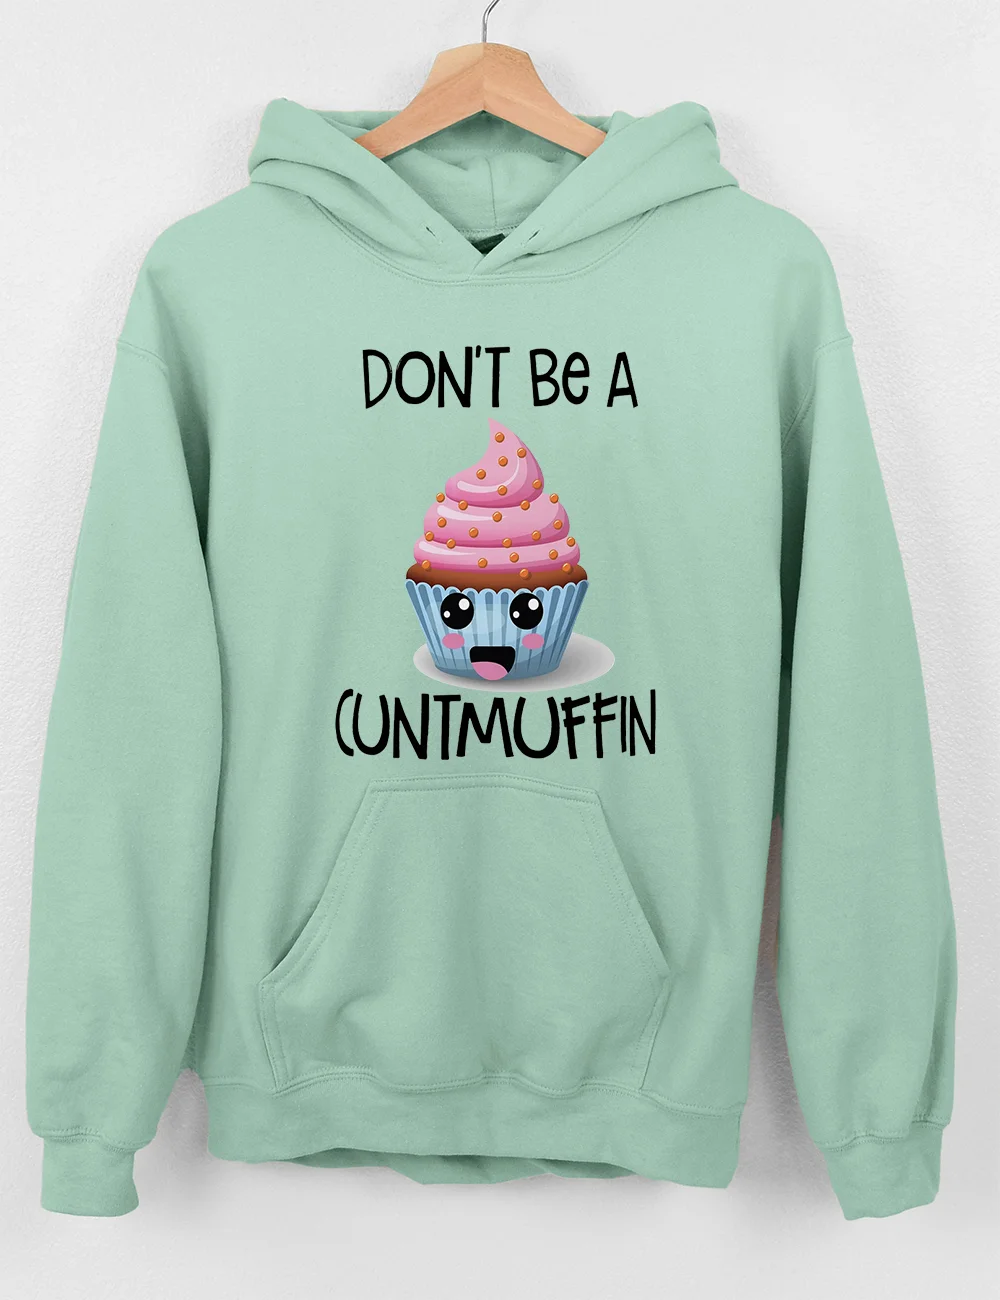 Don't Be A Cuntmuffin/Twatwaffle Hoodie